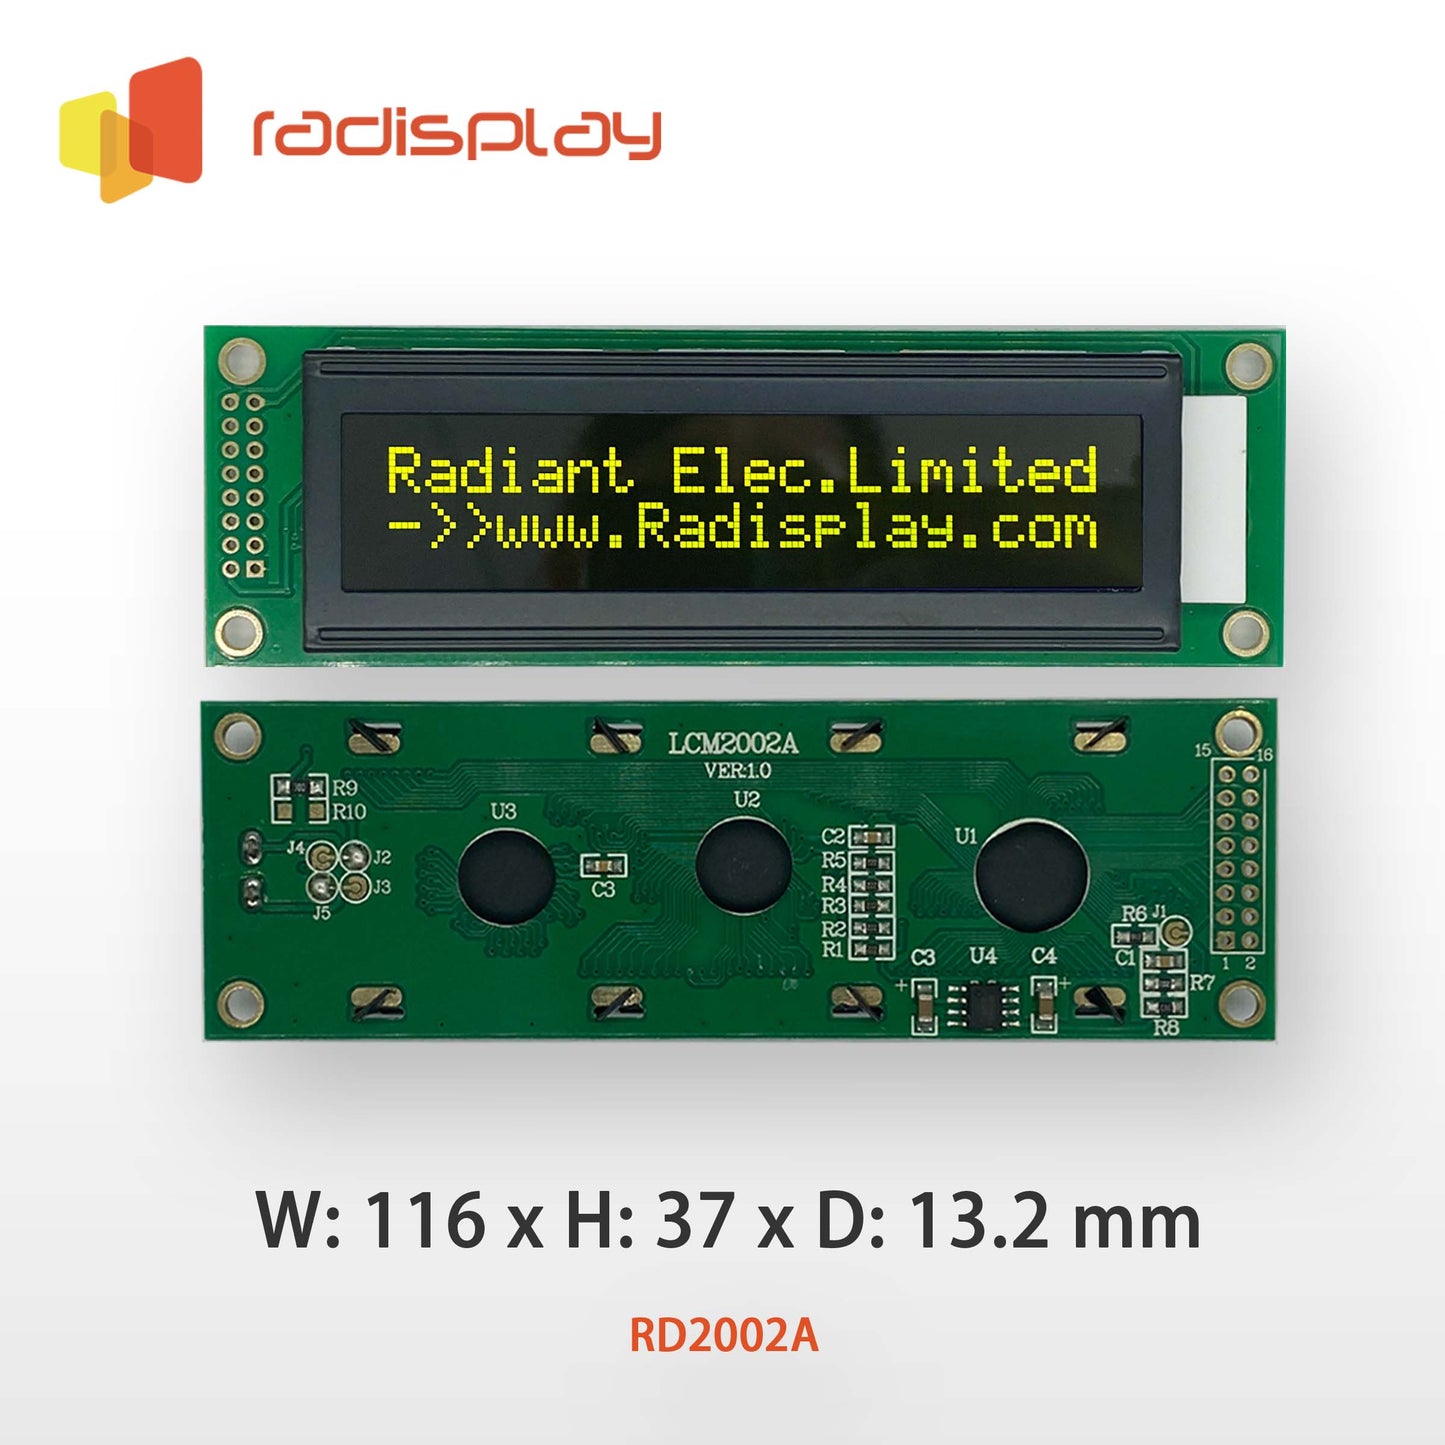 20x2 VATN Character LCD Display Module (RD2002A-VA)